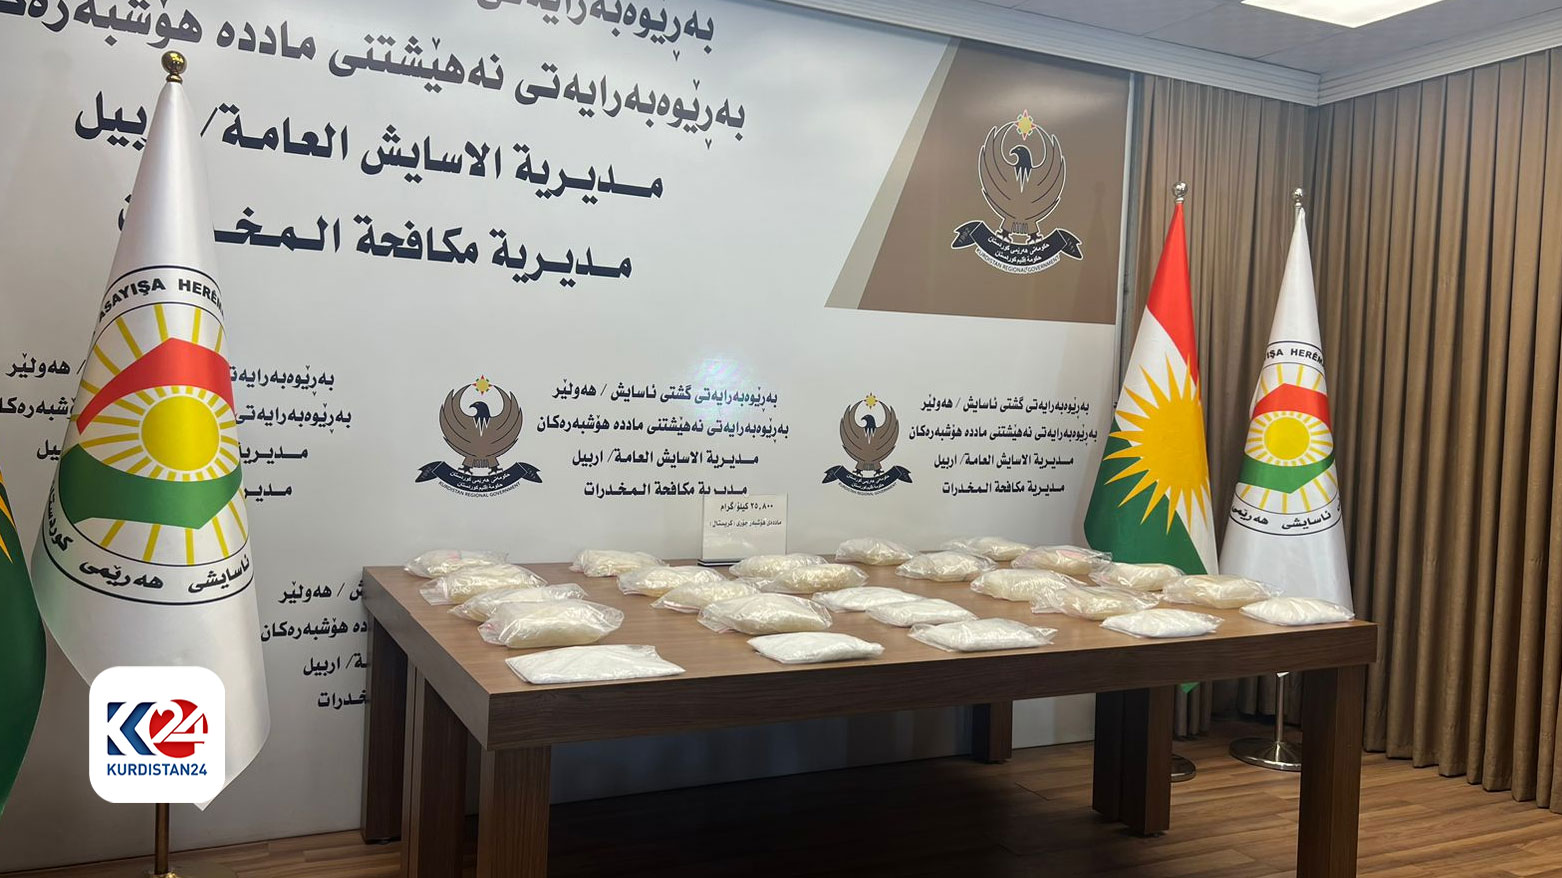 The confiscated drugs on display by Kurdistan Region police. (Photo: Kurdistan Region’s anti-narcotics agency)